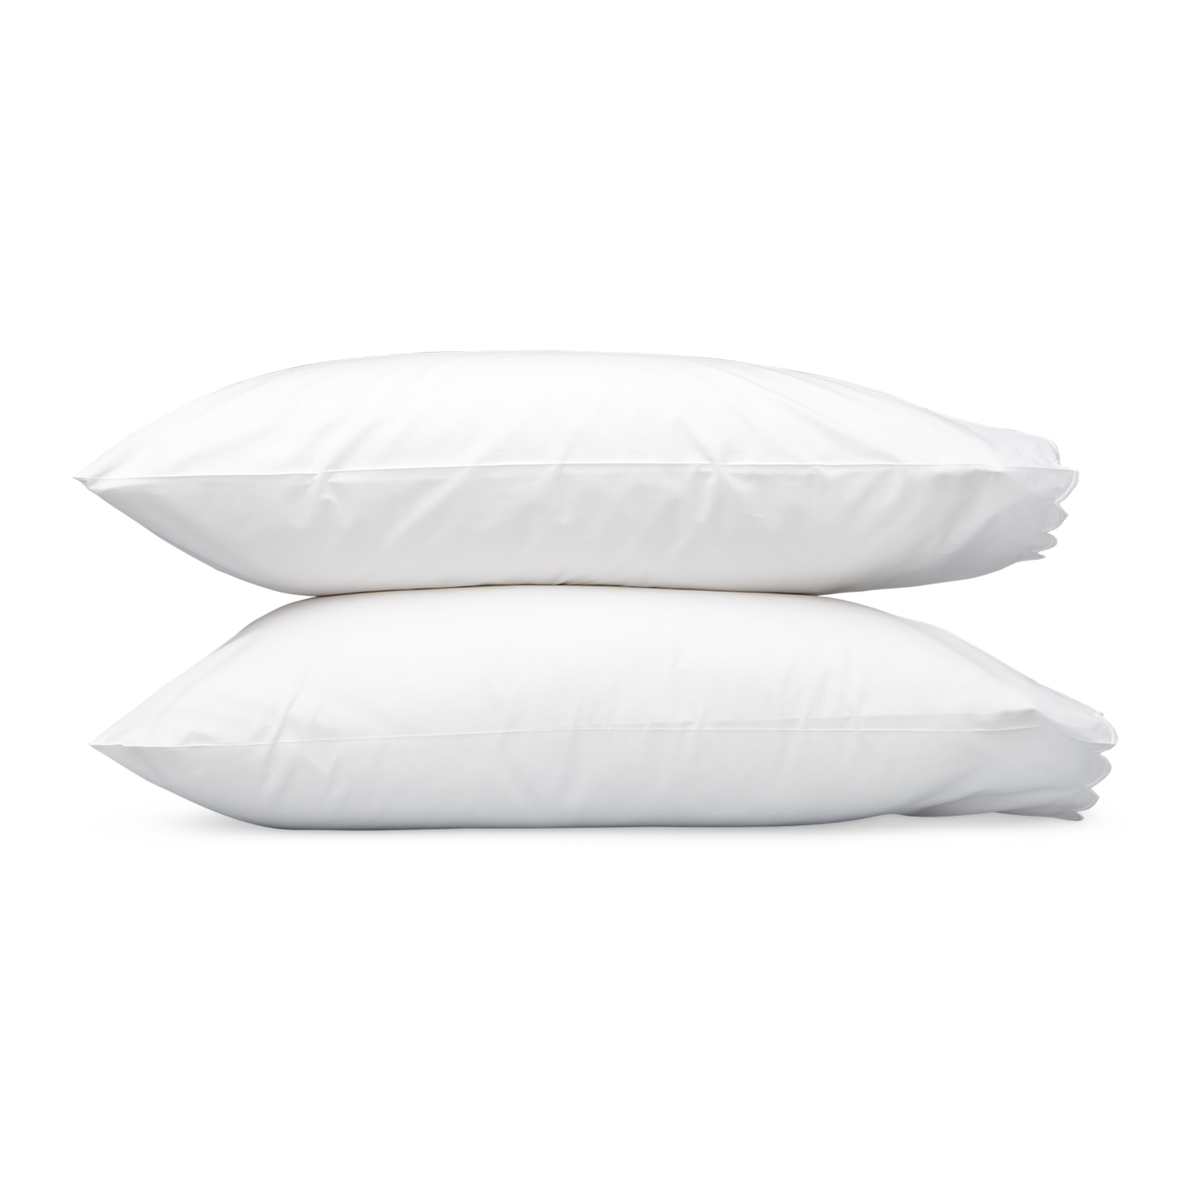 Pair of Pillowcases of Matouk Dakota Bedding in White Color